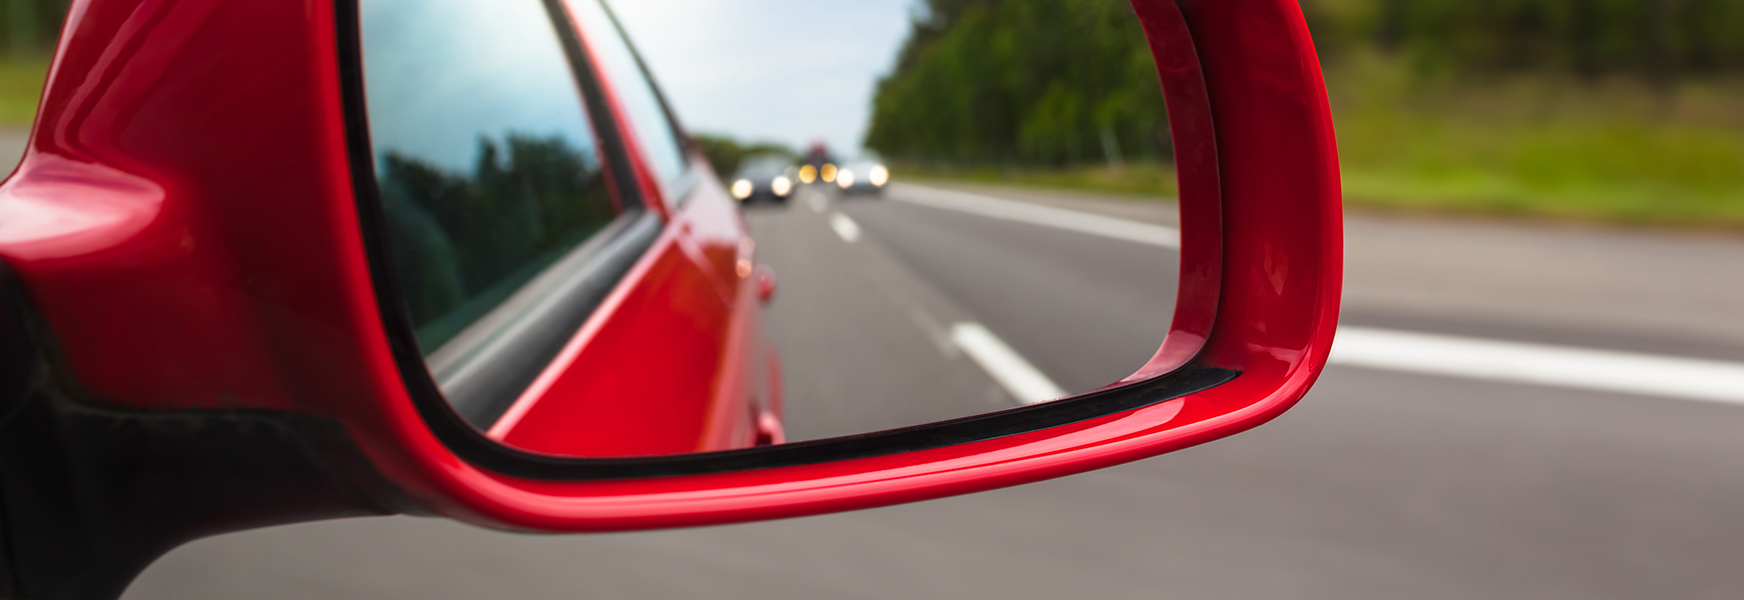 Automobile mirror adjustment to eliminate blind spots